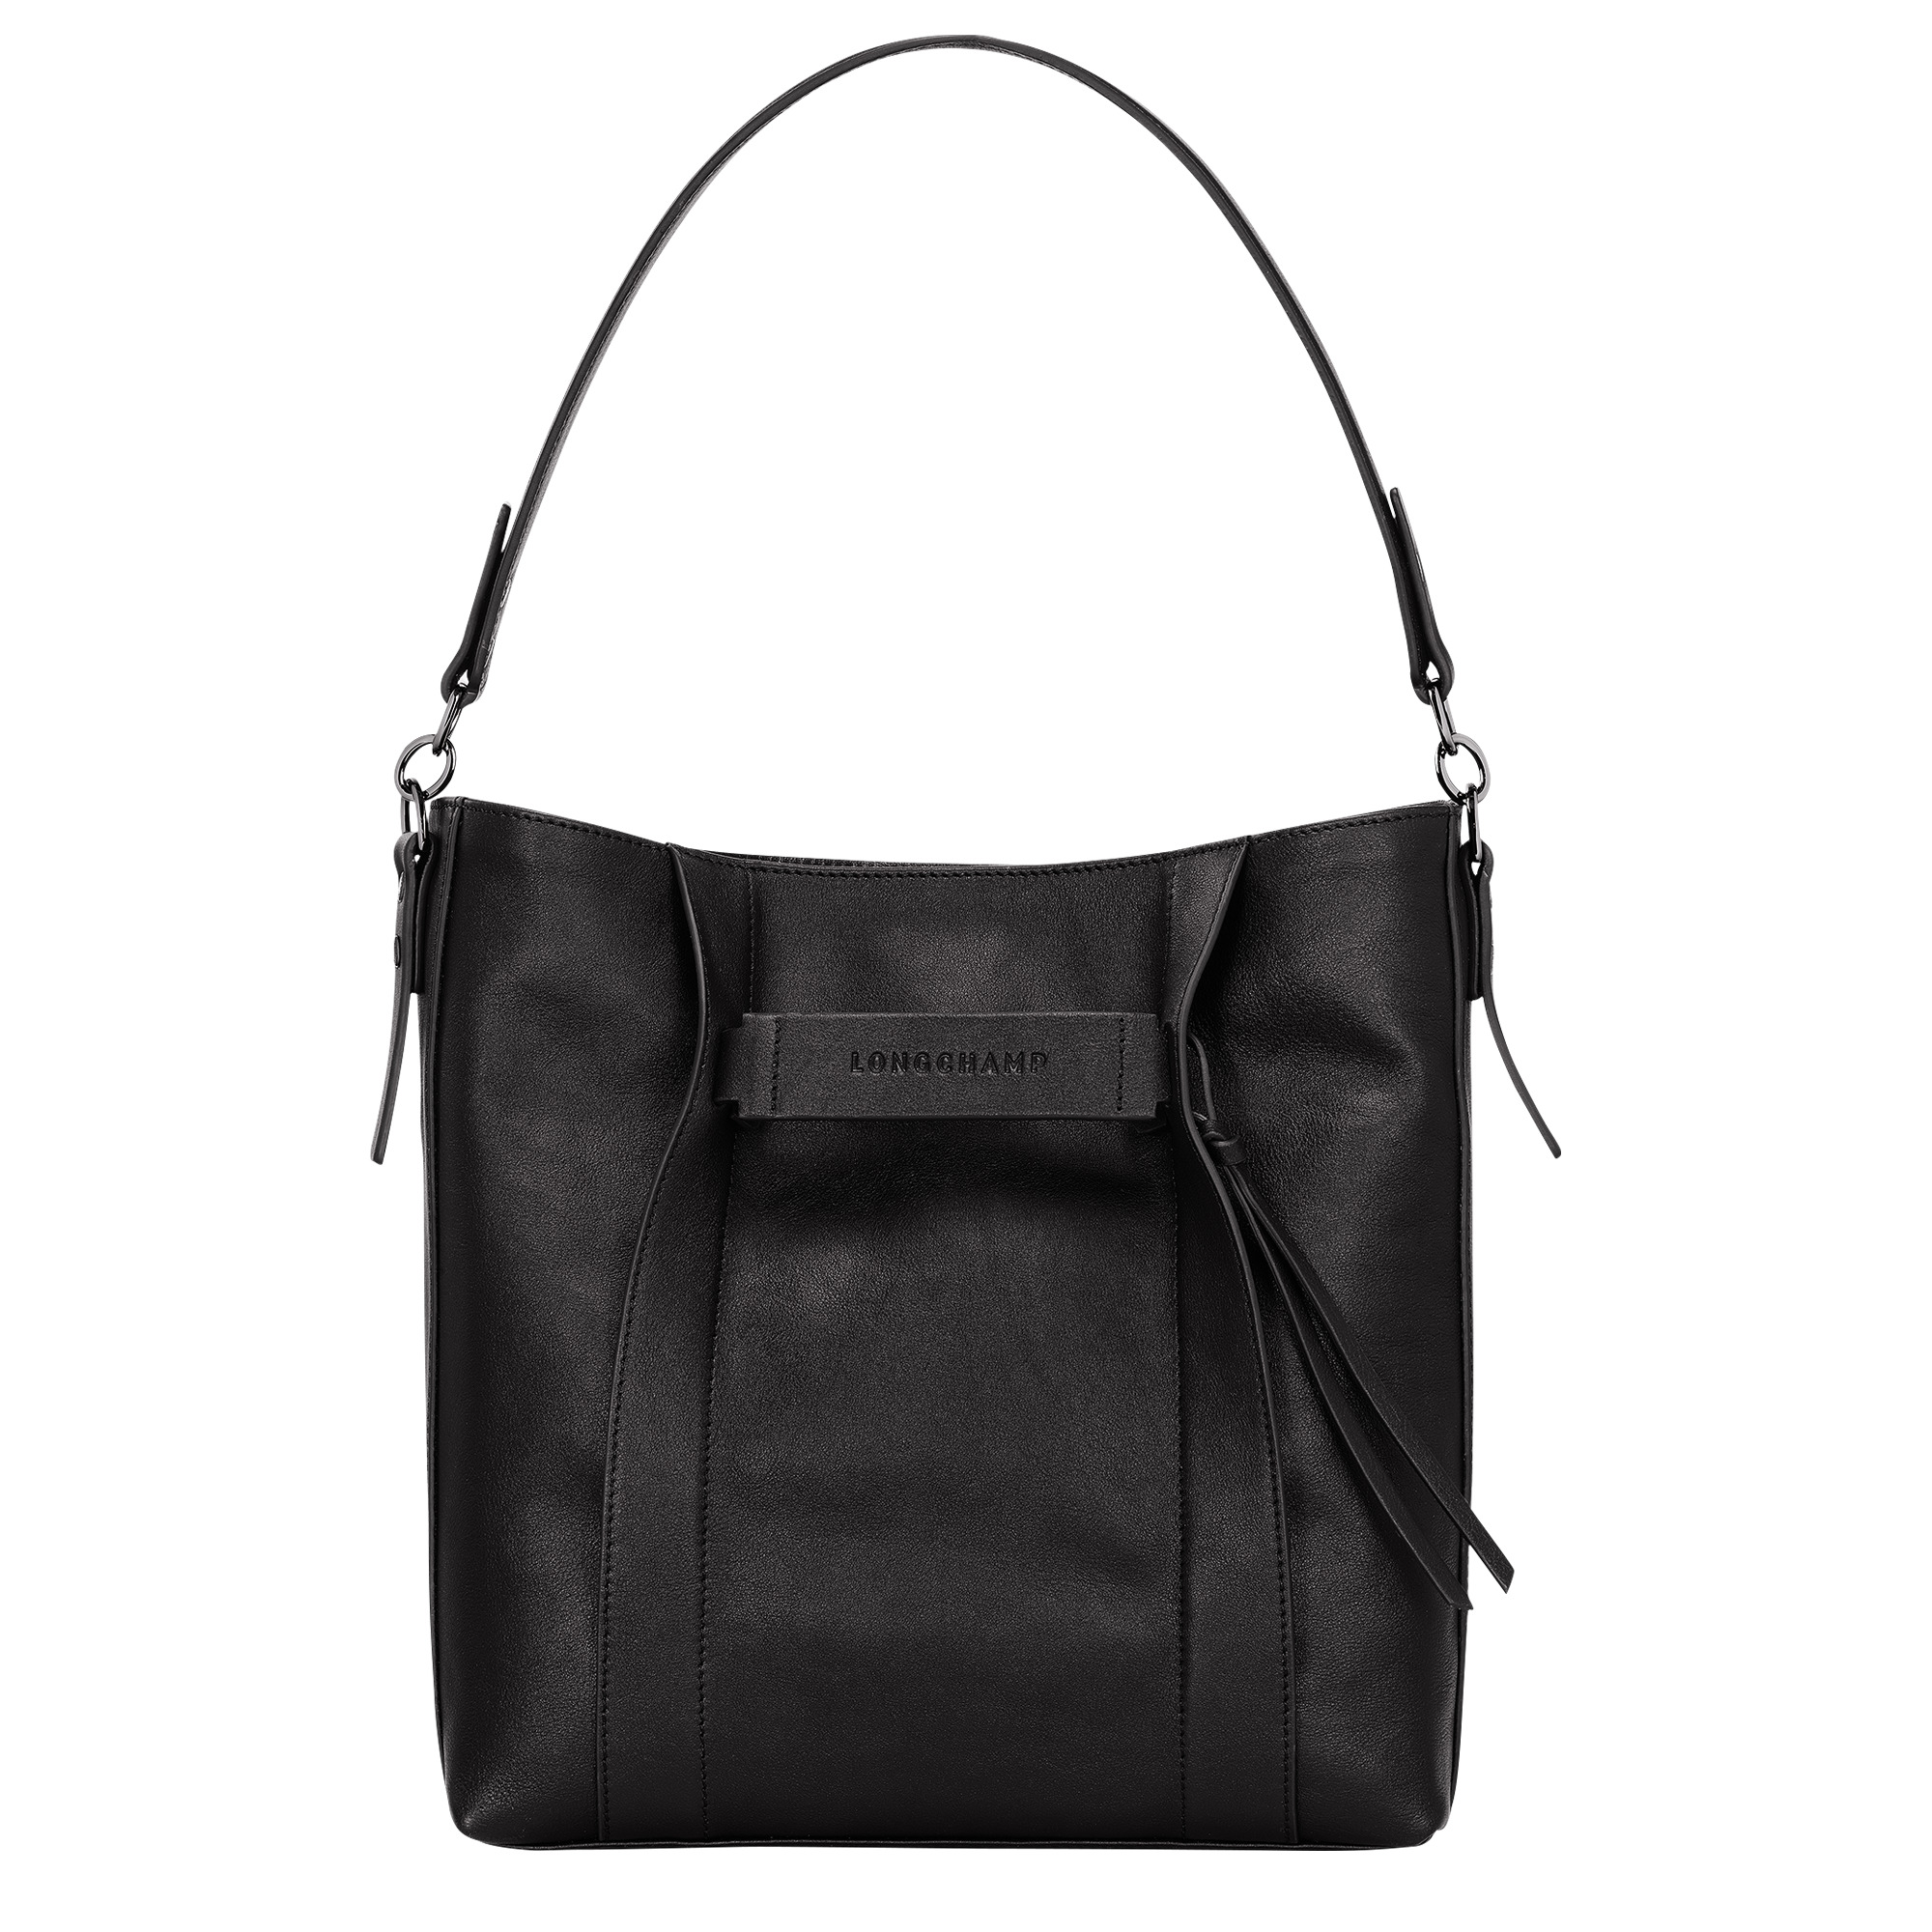 Longchamp 3D M Hobo bag Black - Leather - 1